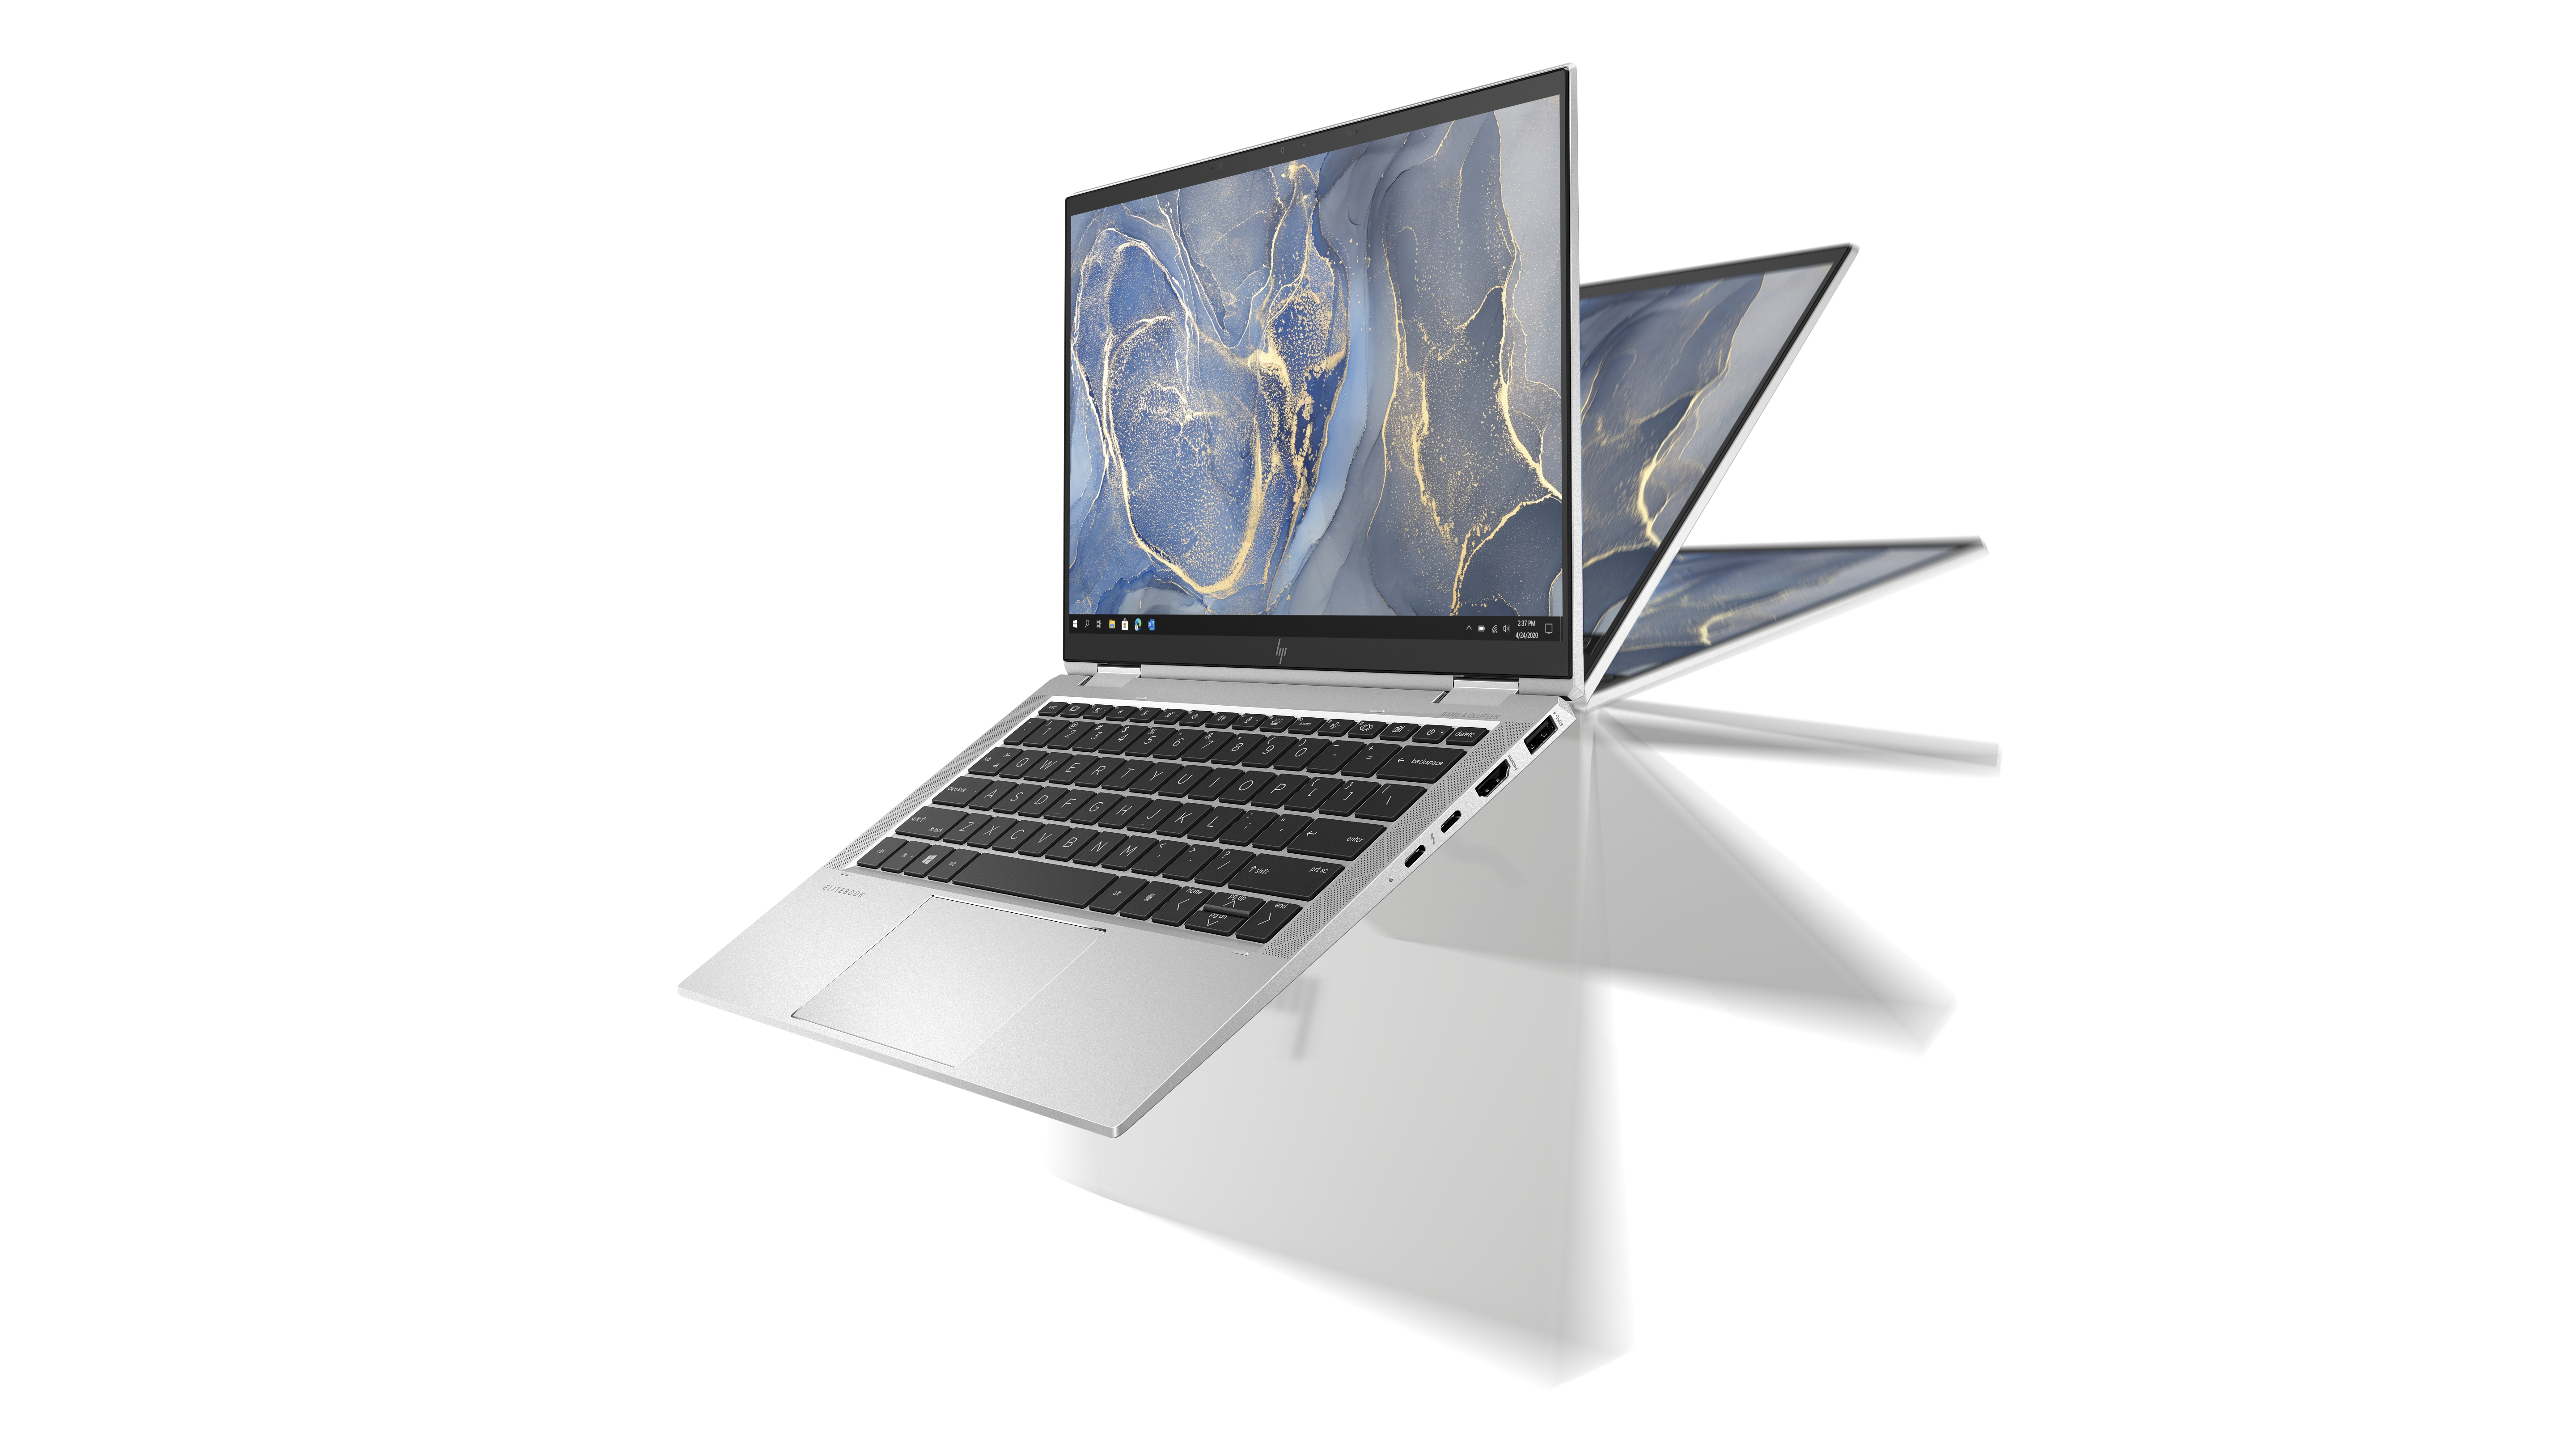 HP EliteBook x360 1030 G8 and HP EliteBook x360 1040 G8